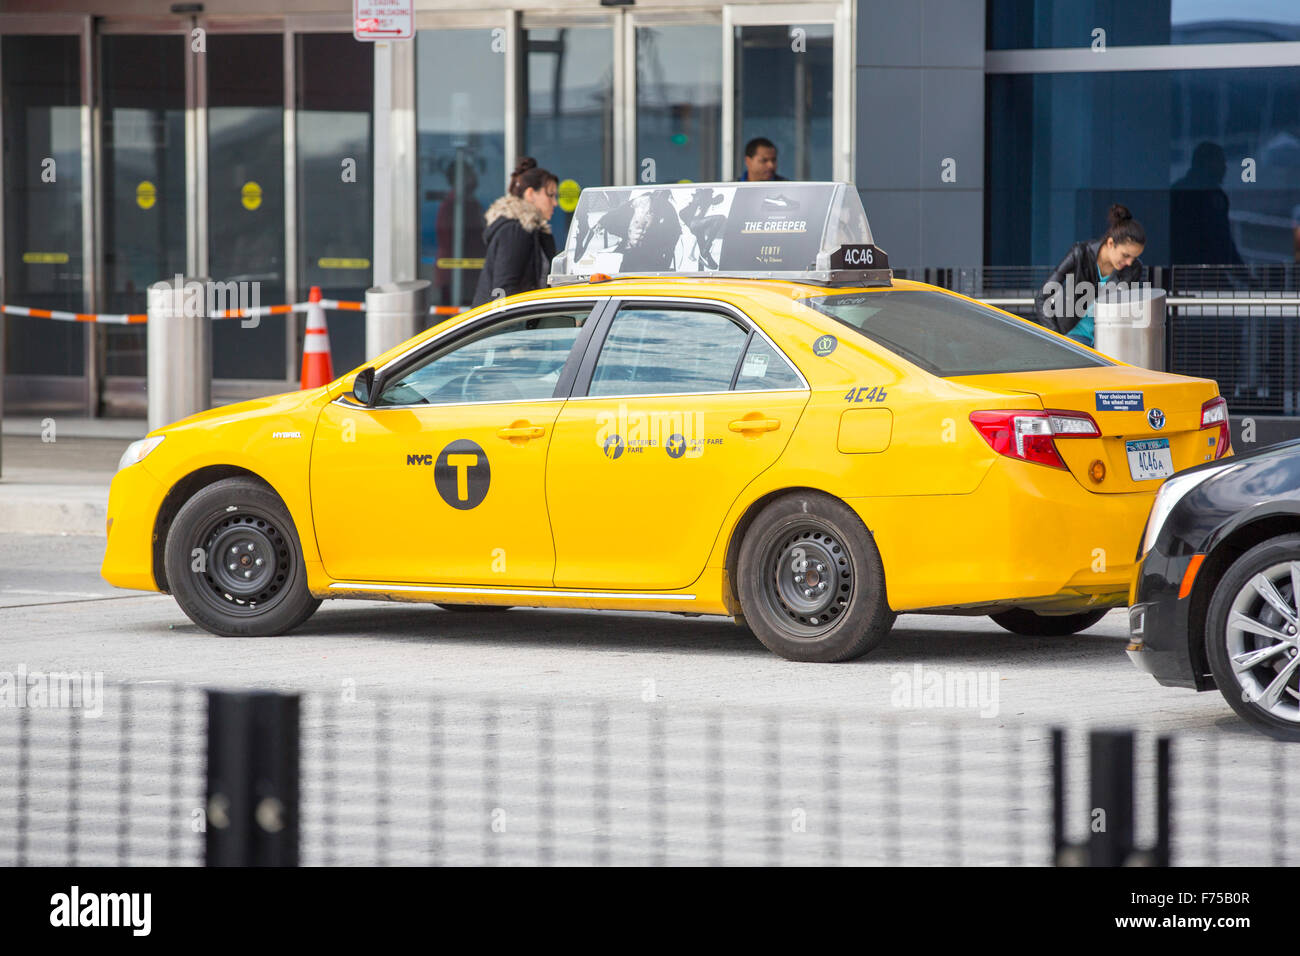 A Yellow Taxi Cab at JFK Airport